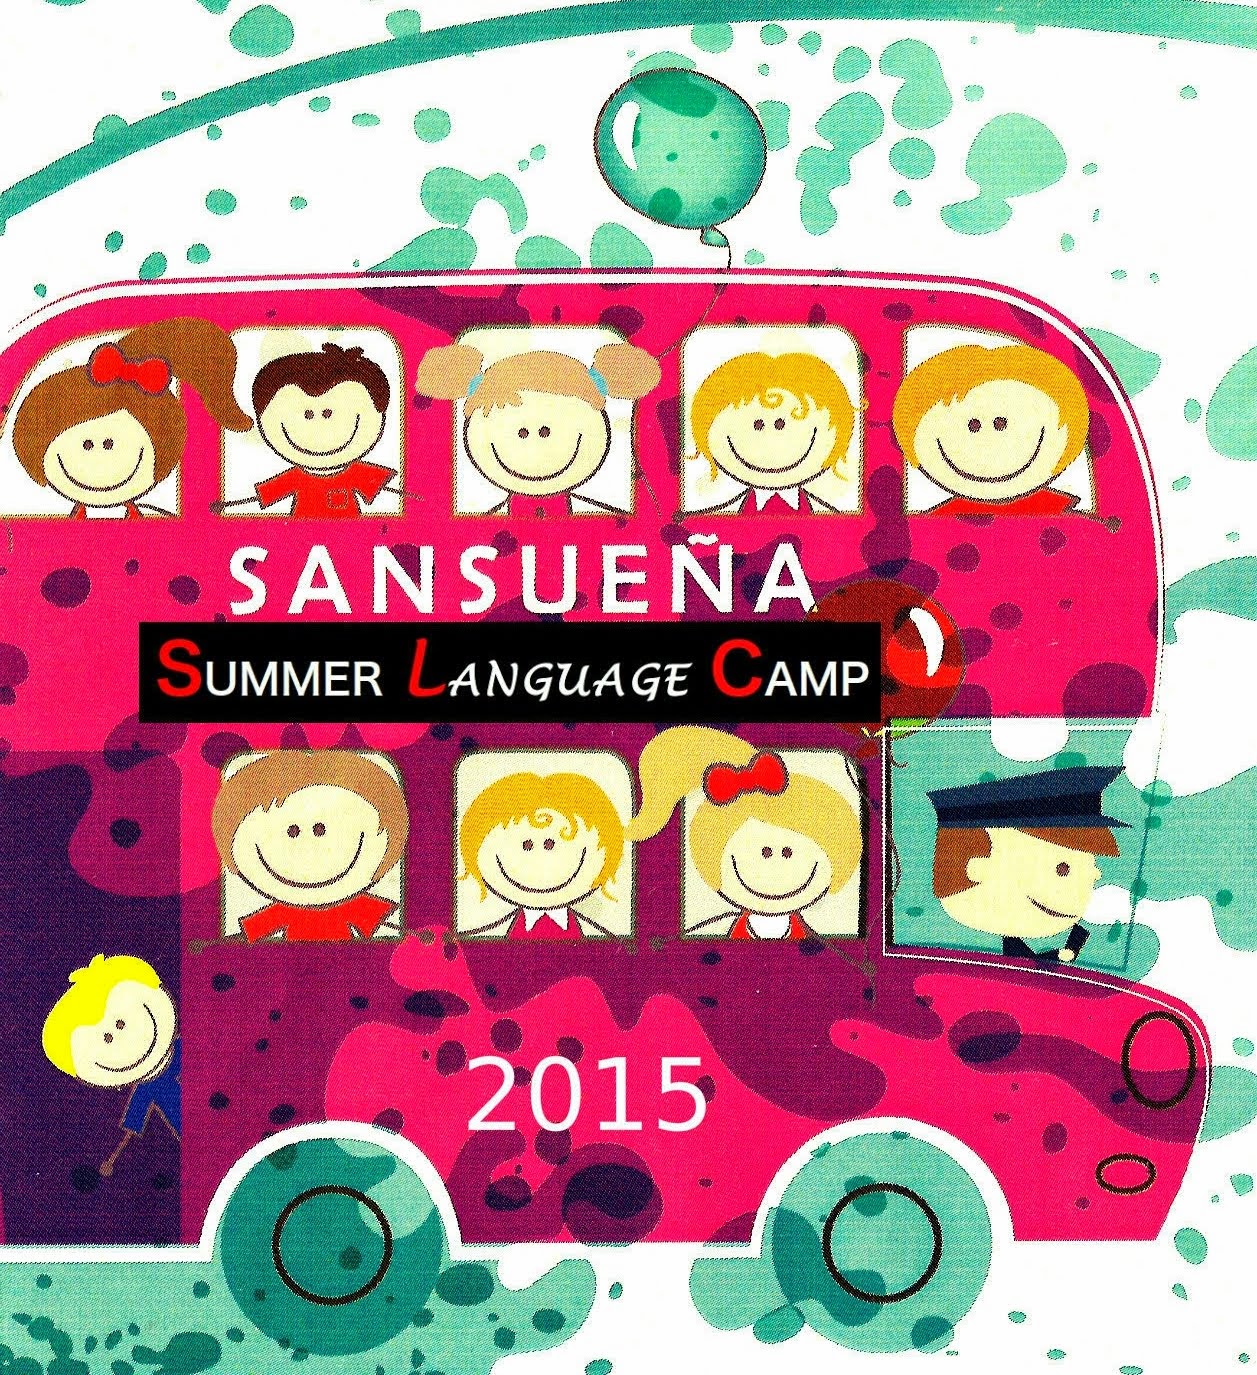 SUMMER LANGUAGE CAMP